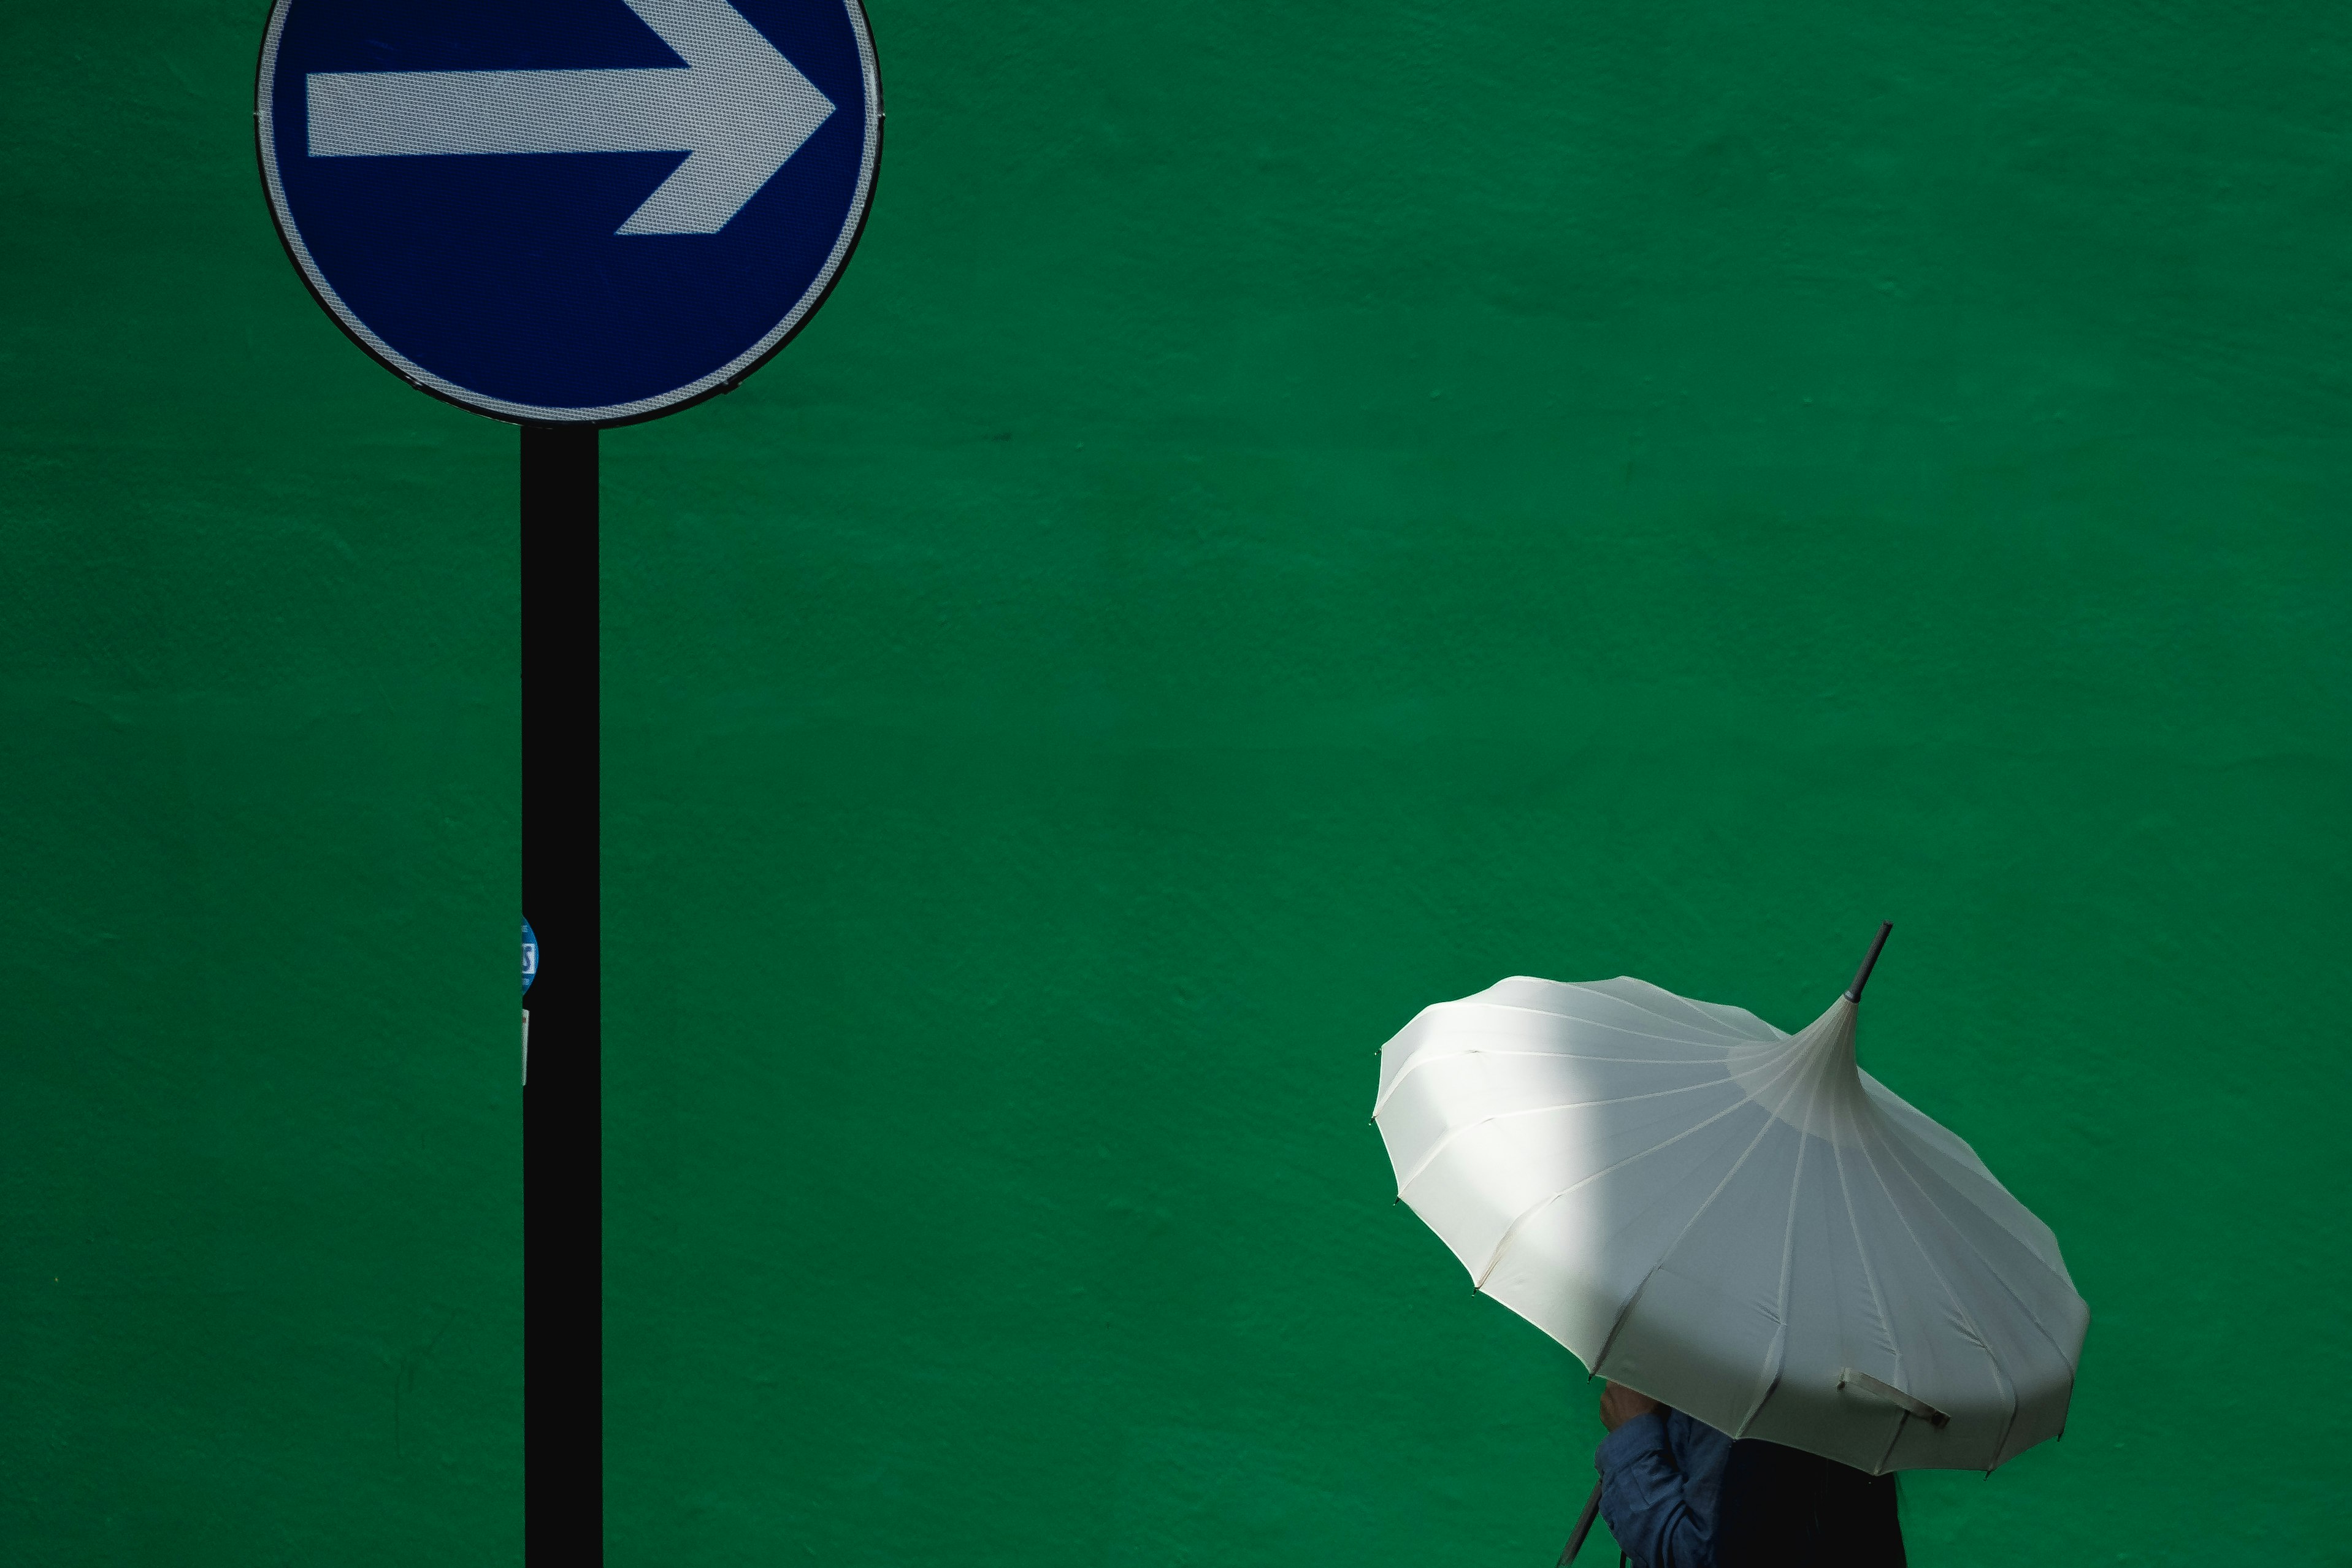 person using white umbrella near blue road signage